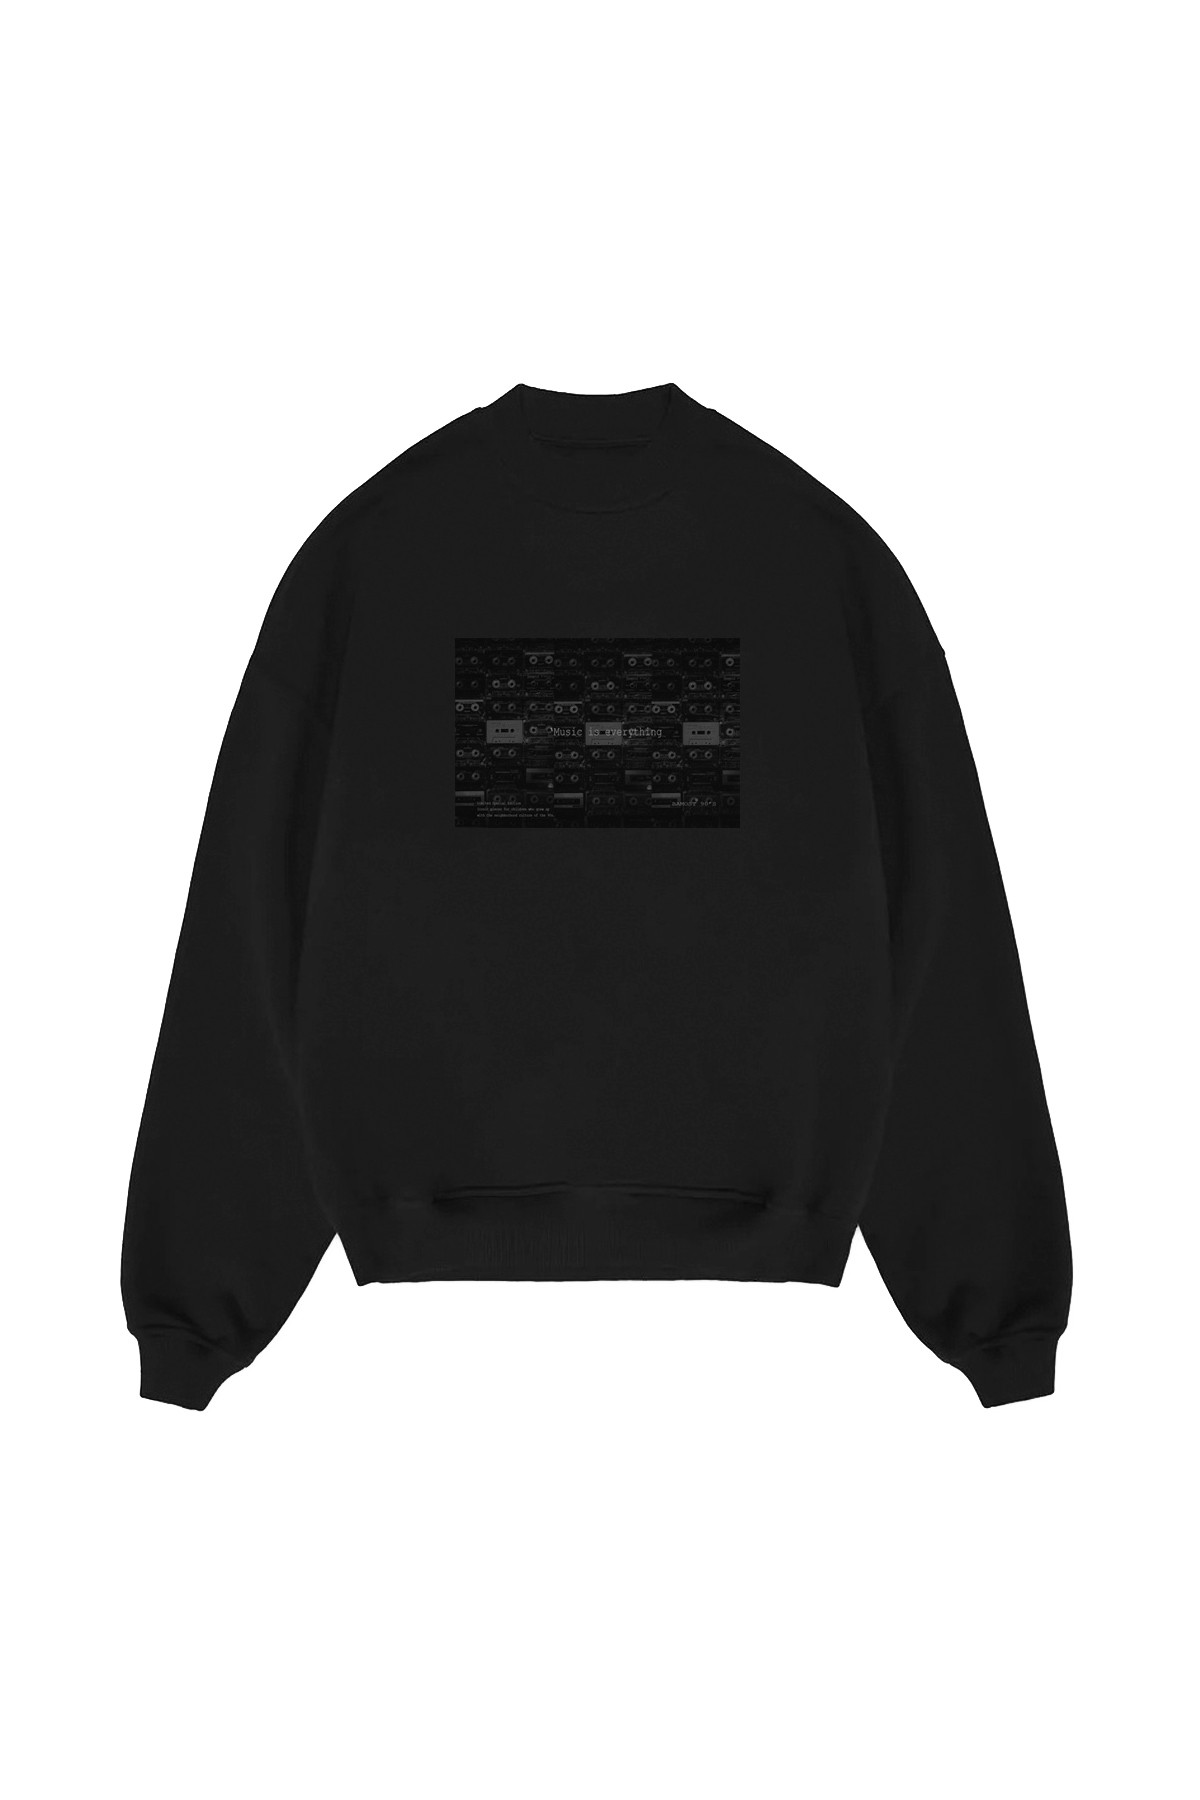 Music - 90'S Club Oversize Sweatshirt - BLACK